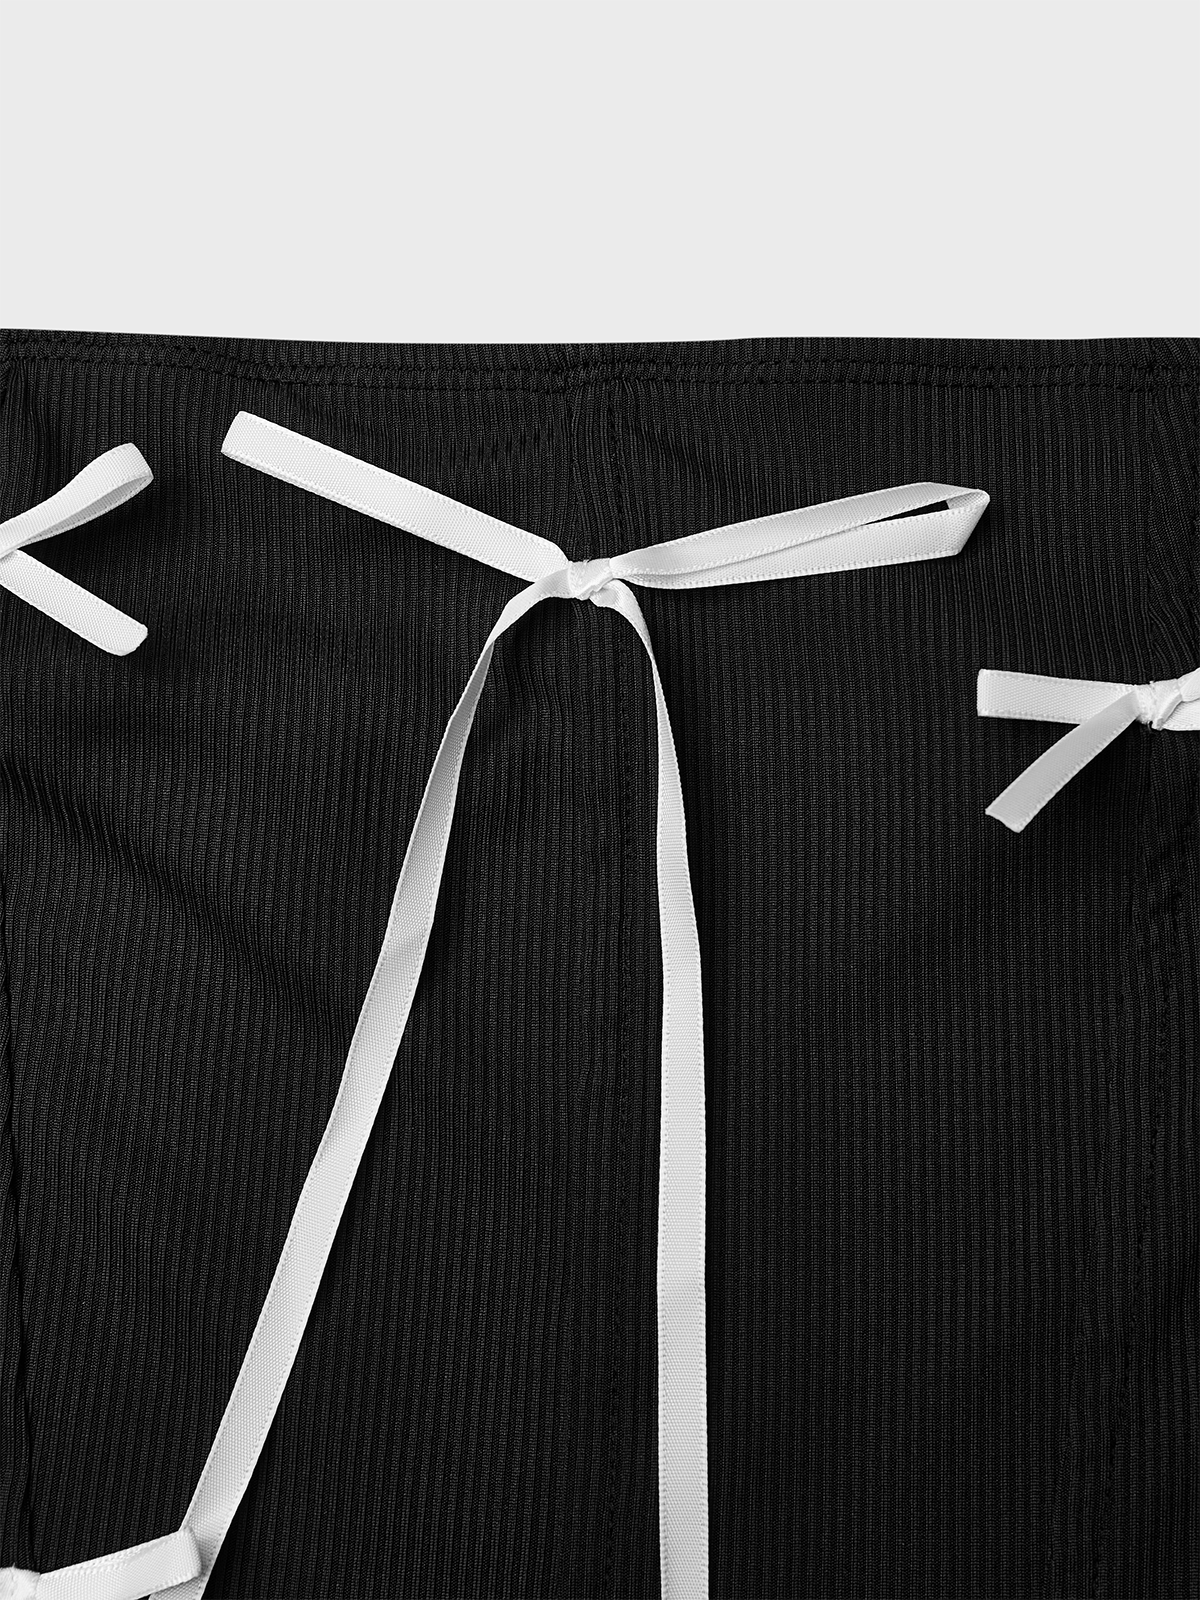 Jersey Cut Out Strapless Plain Sleeveless Jumpsuit